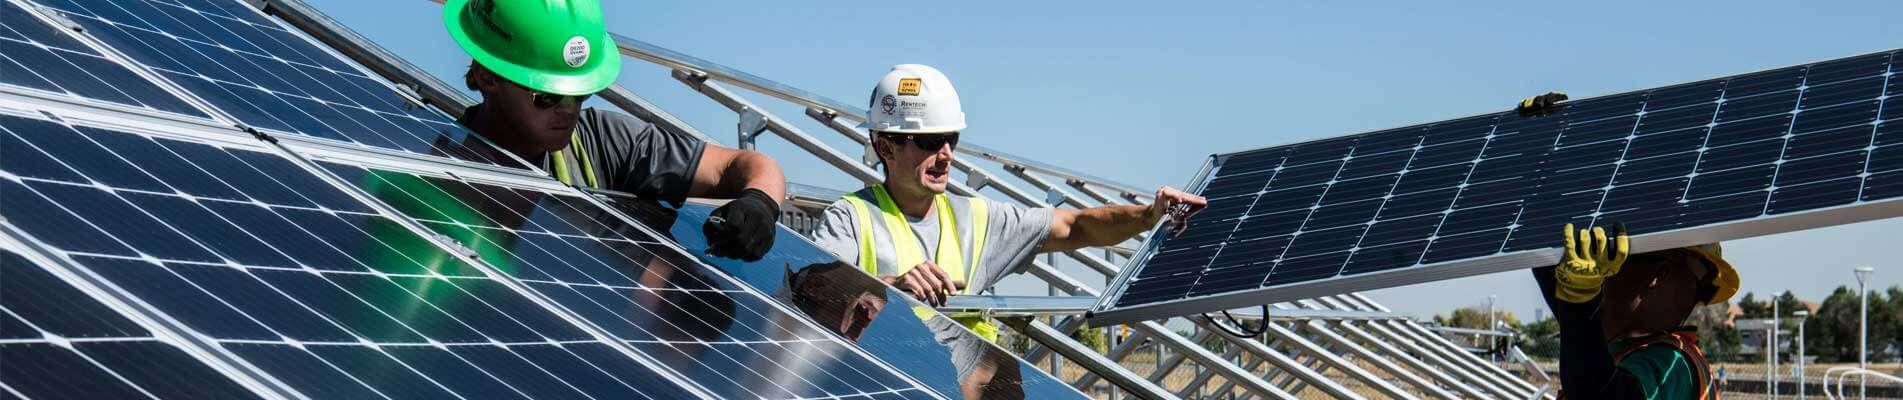 Best solar panel experts North brisbane